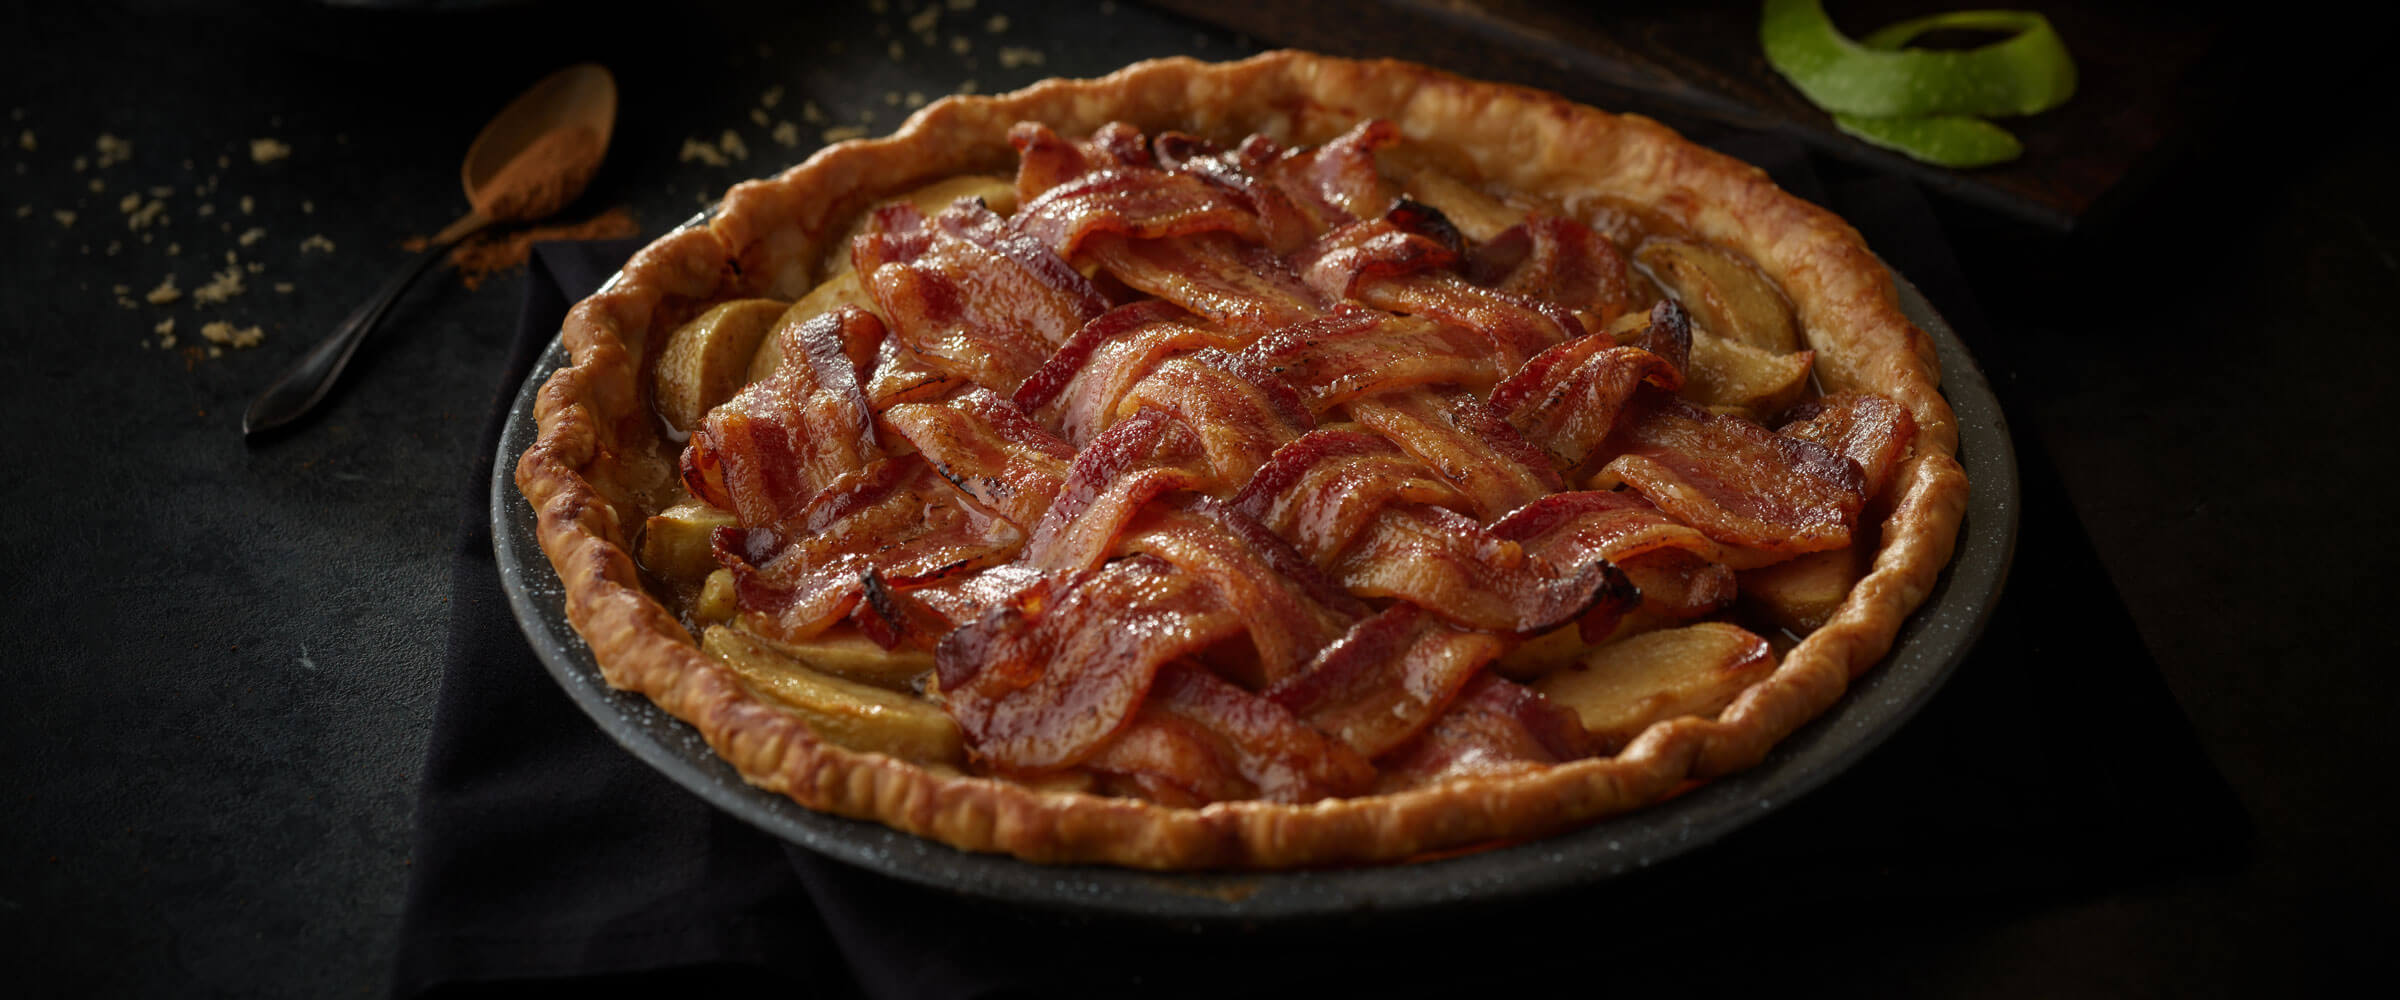 Apple Cider Bacon Lattice Pie in pie pan